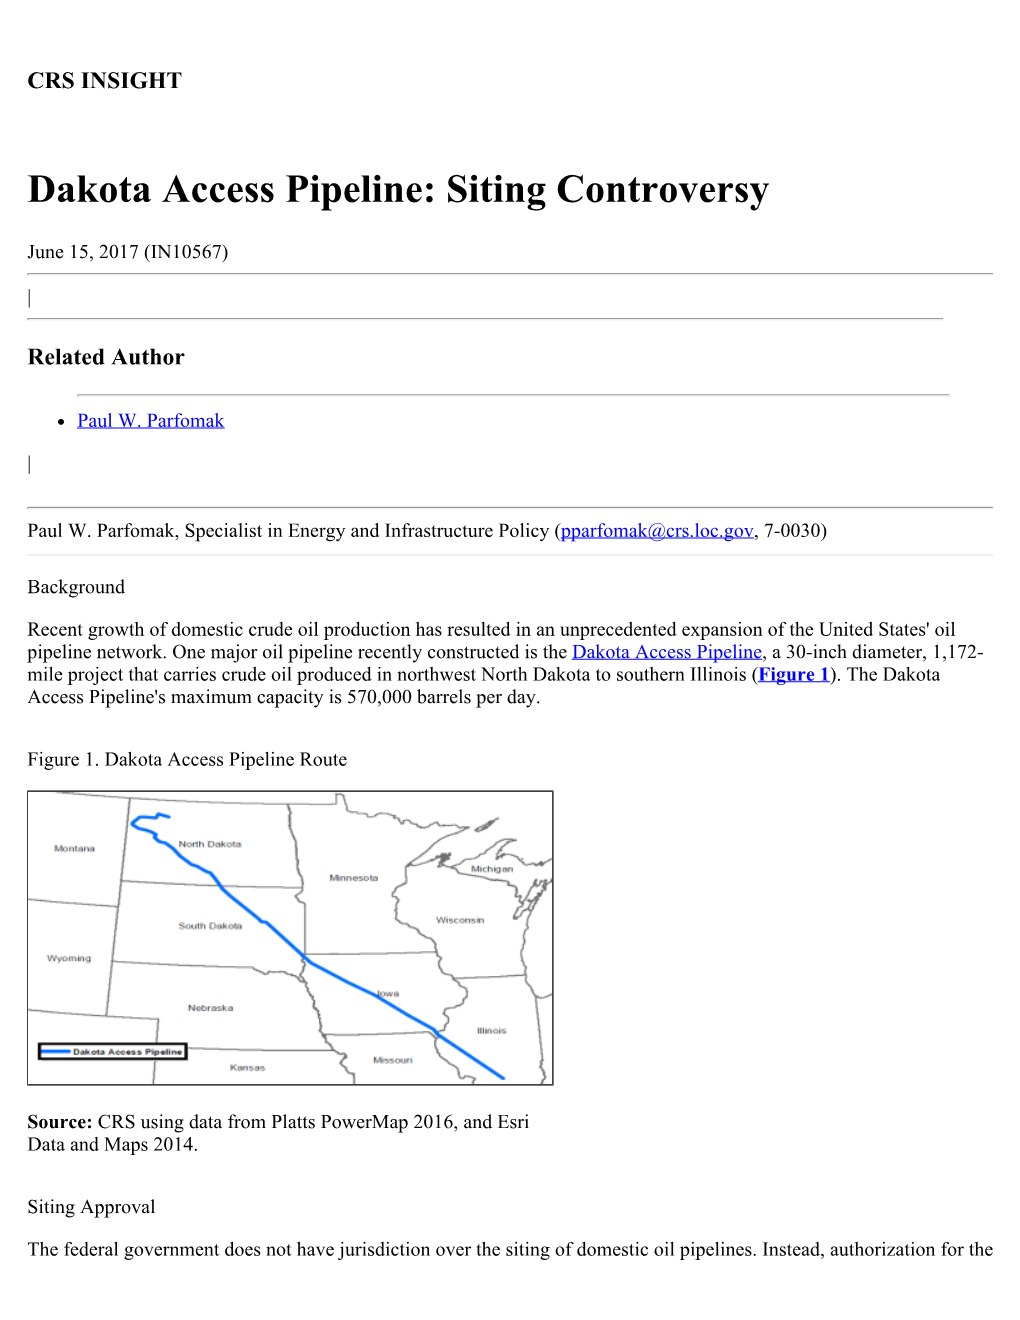 Dakota Access Pipeline: Siting Controversy